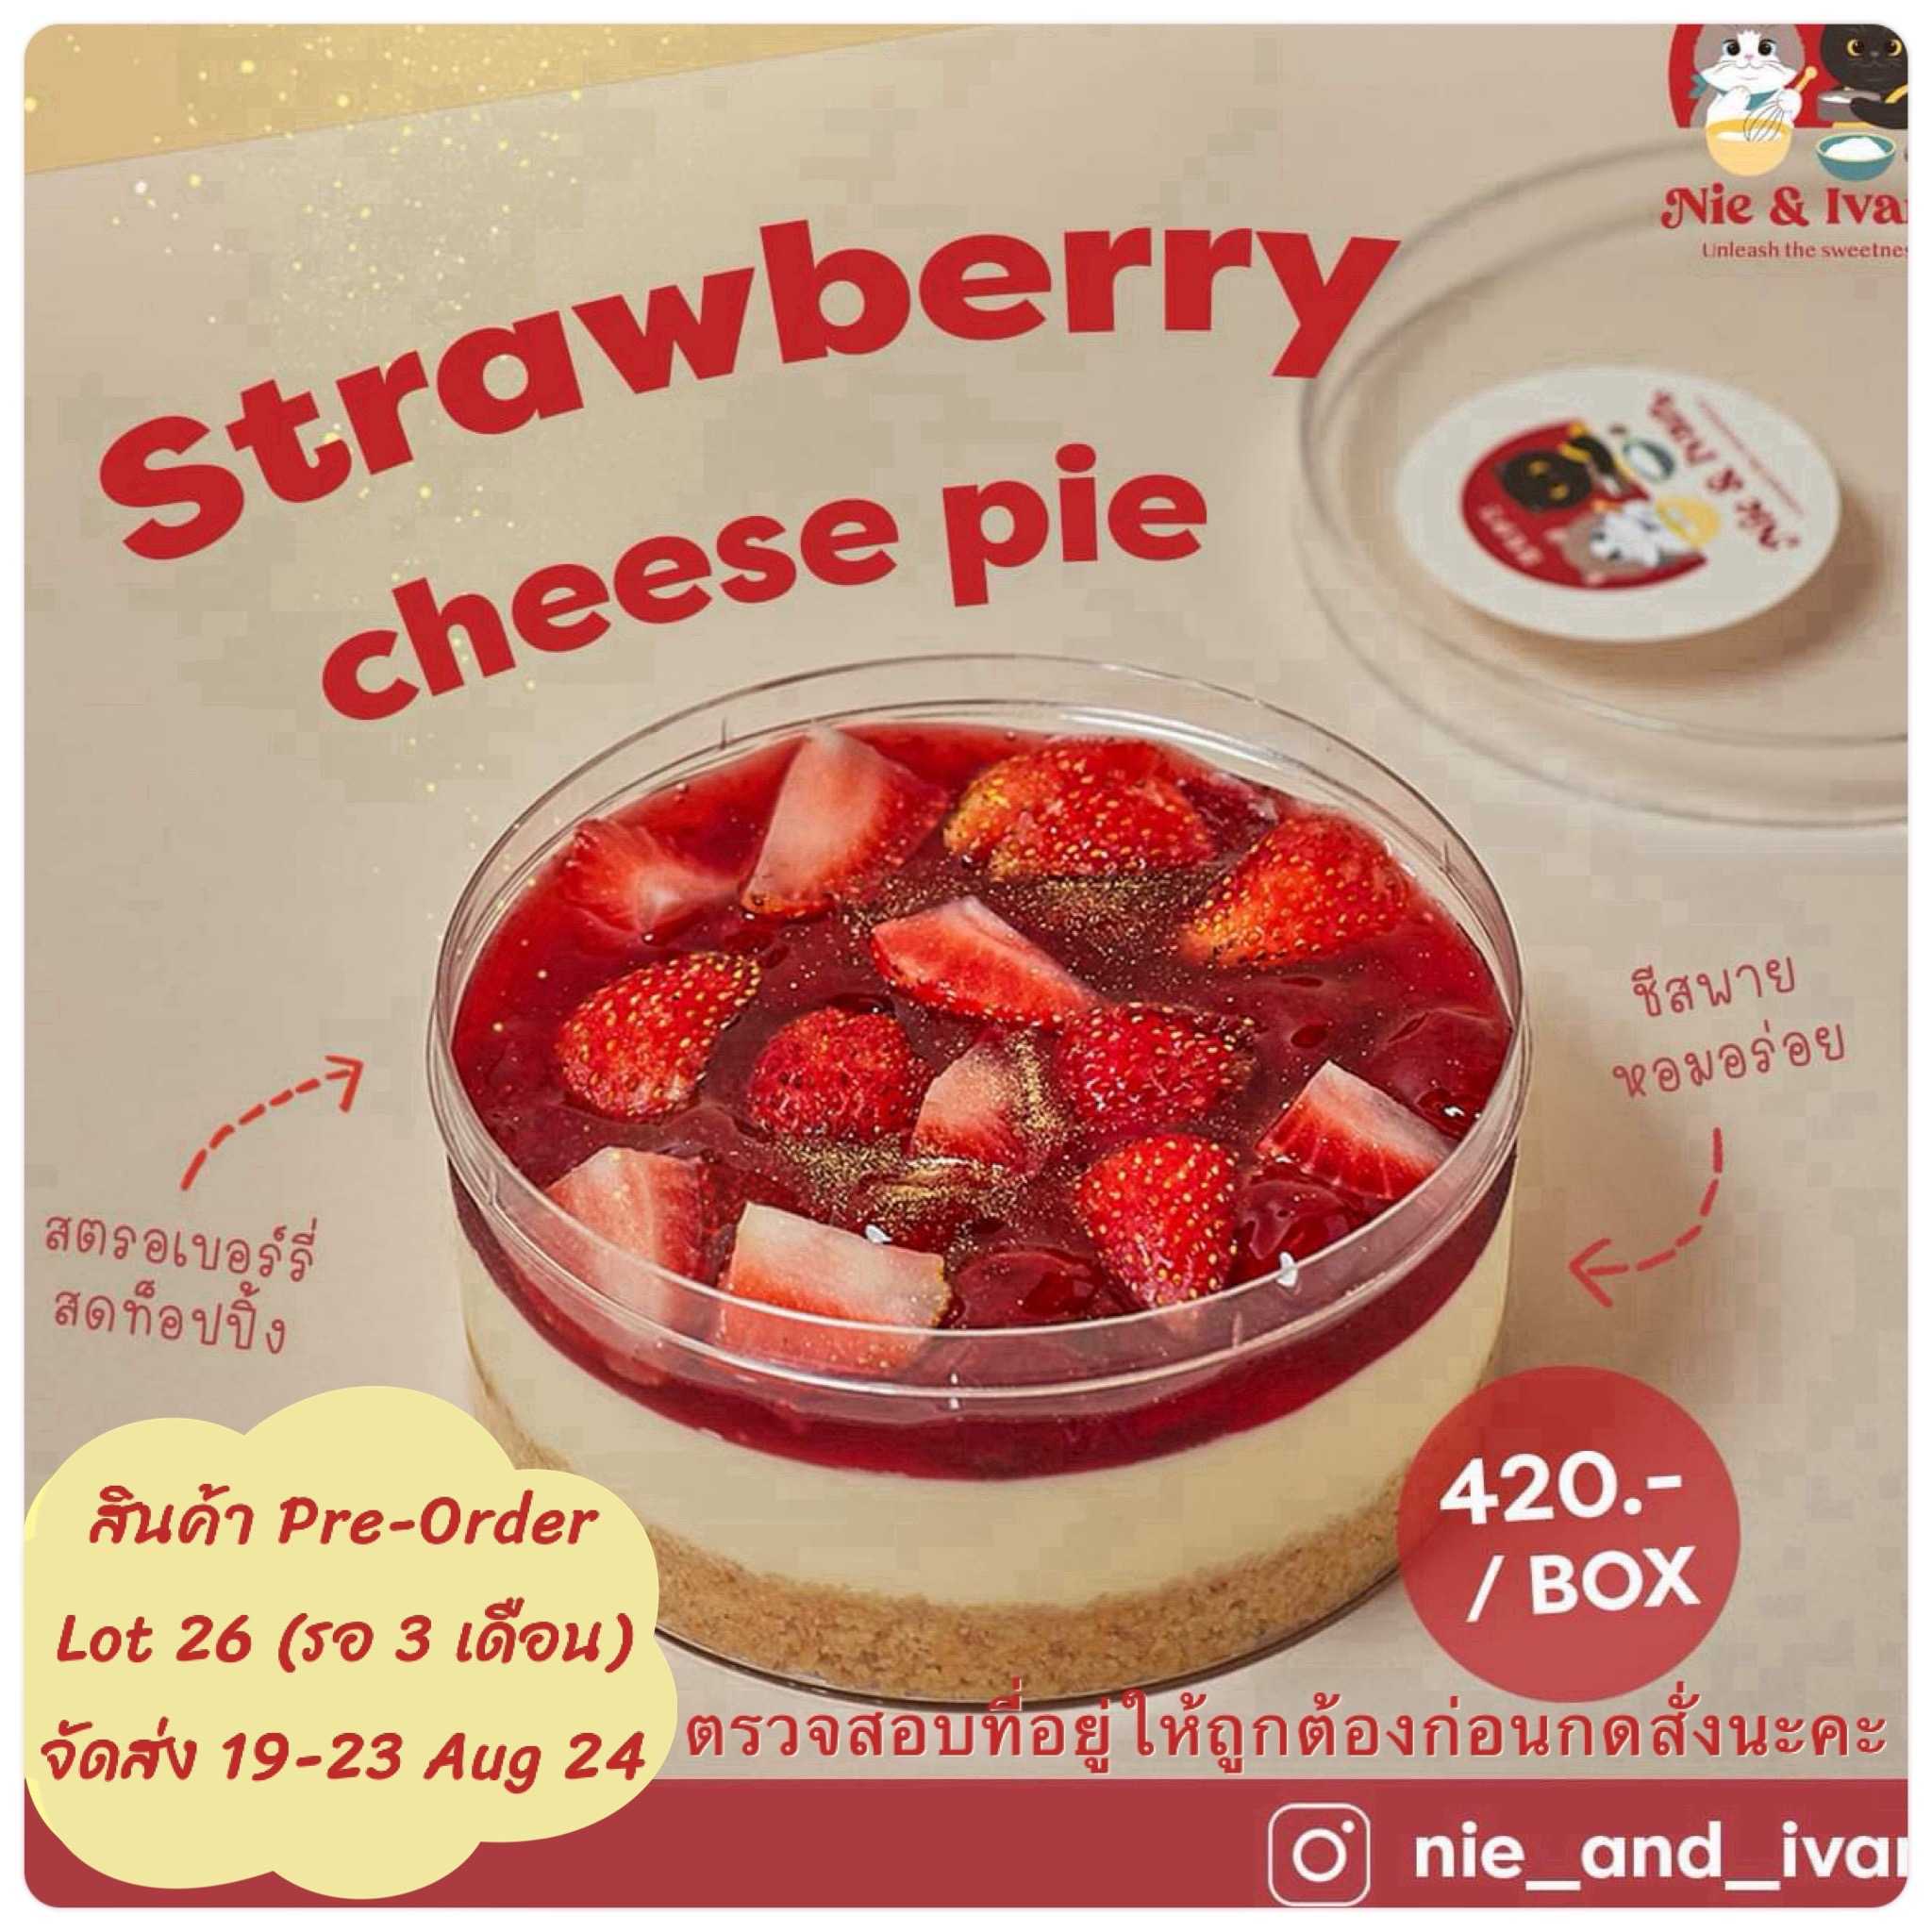 Strawberry cheese pie Lot26 (จัดส่งวันที่ 19-23 สิงหาคม) ขนมยอดนิยม